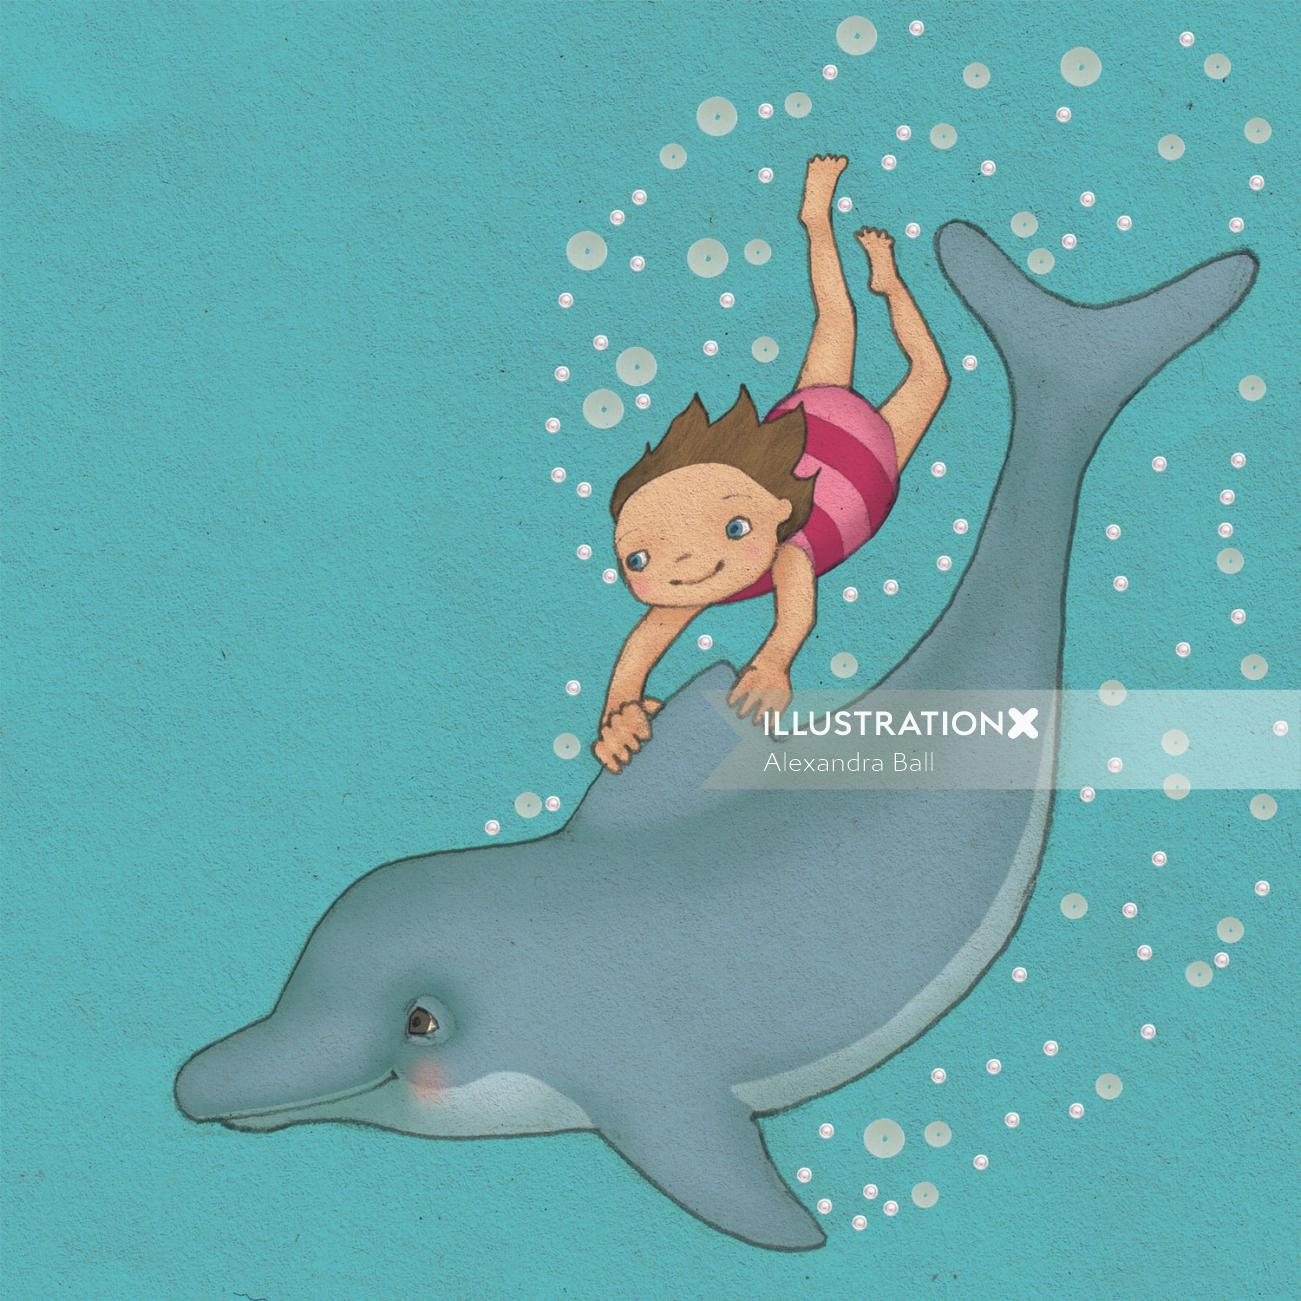 enfant, girl, équitation, dos, dauphin, sous-marin, ligne, illustration